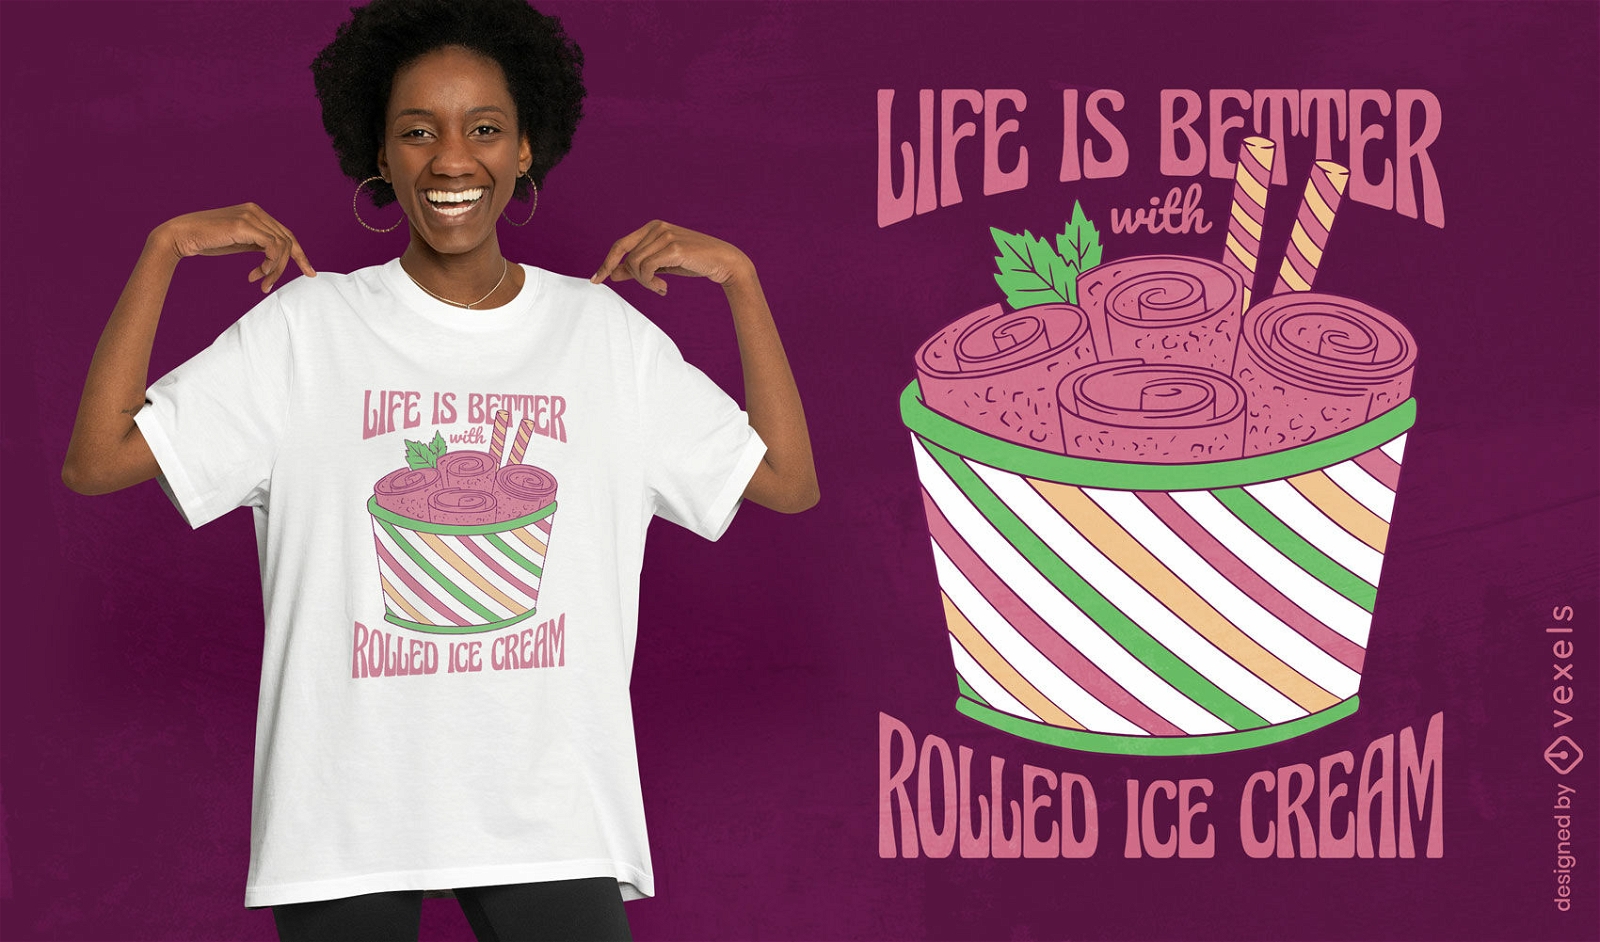 Rolled ice cream dessert t-shirt design